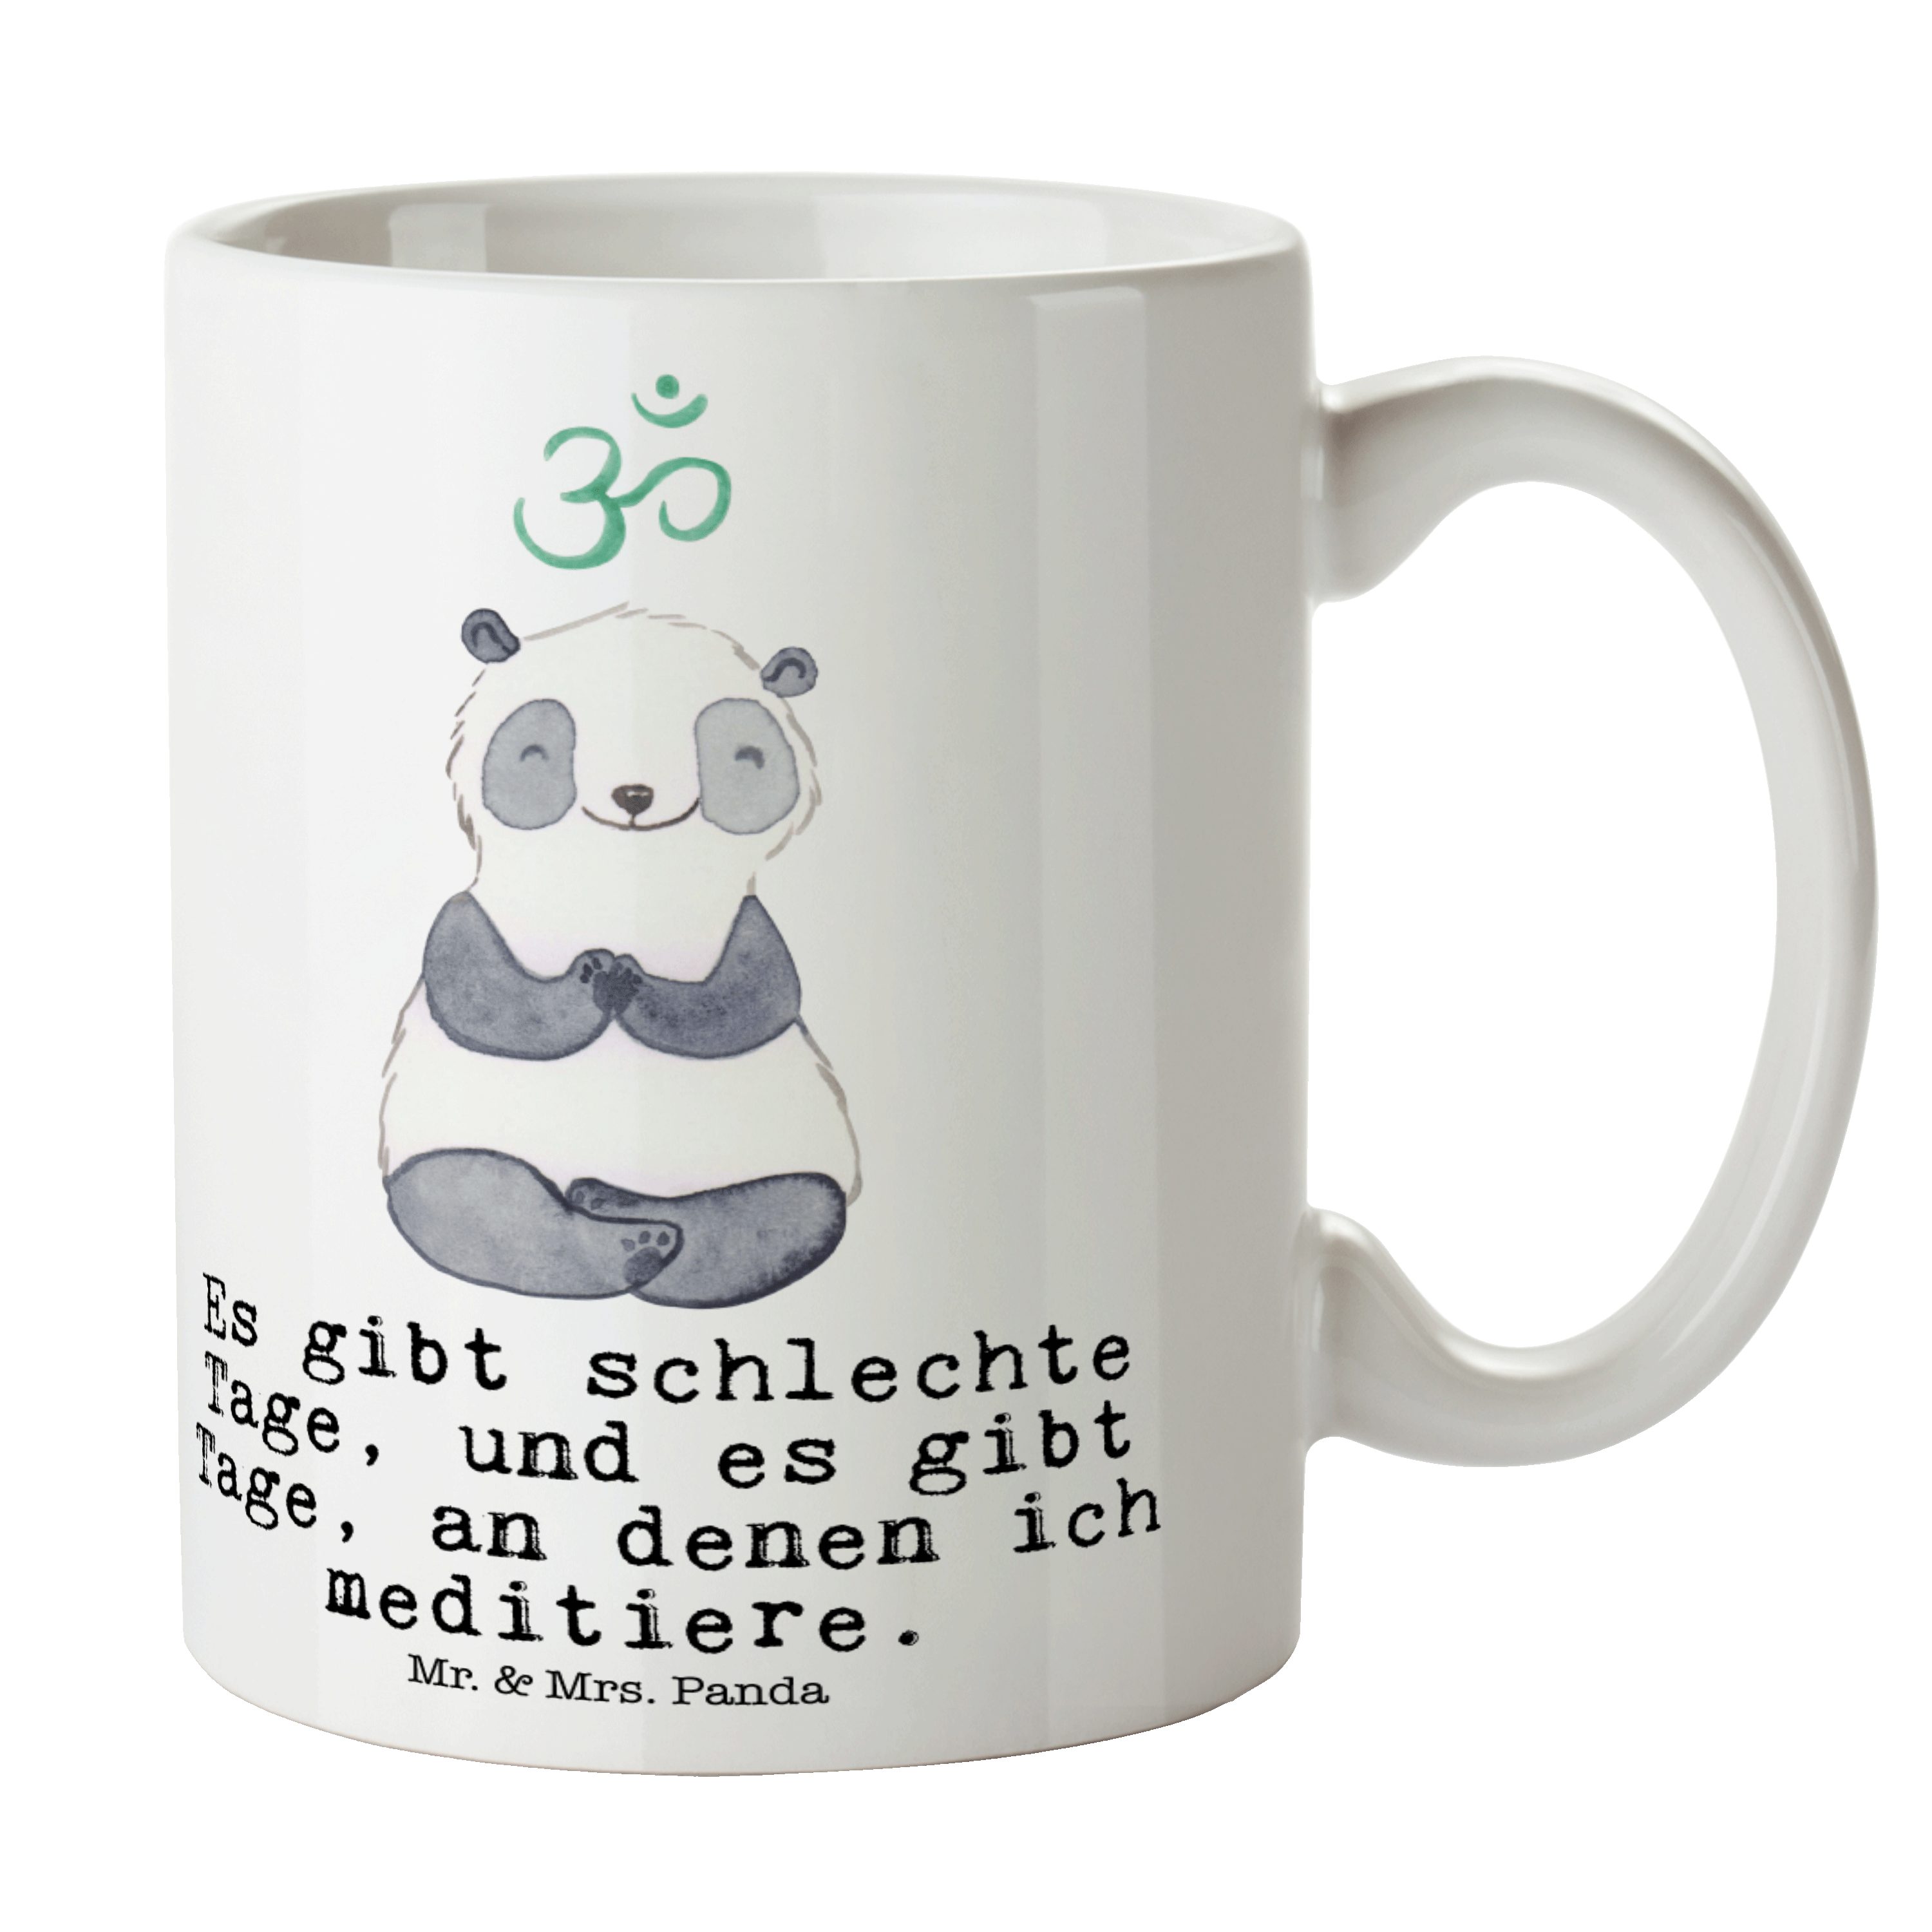 Mr. & Mrs. Panda Tasse Panda Meditieren Tage - Weiß - Geschenk, Kaffeebecher, Teetasse, Dank, Keramik | Tassen